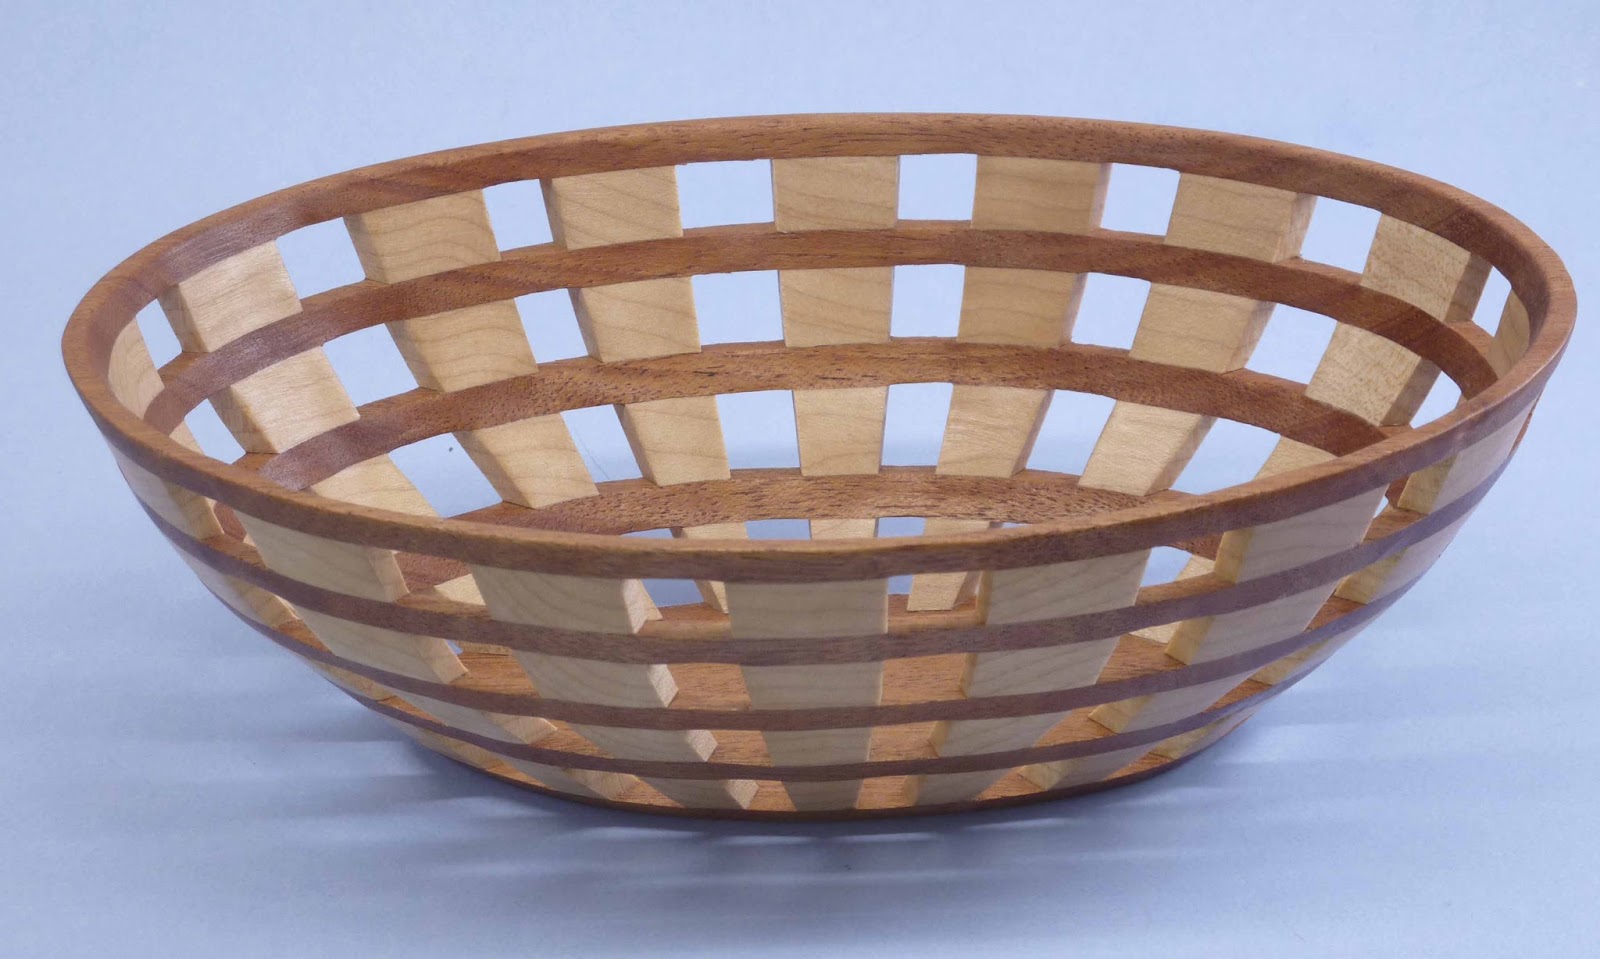 scroll-saw-bowls-oval-open-segmented-bowl